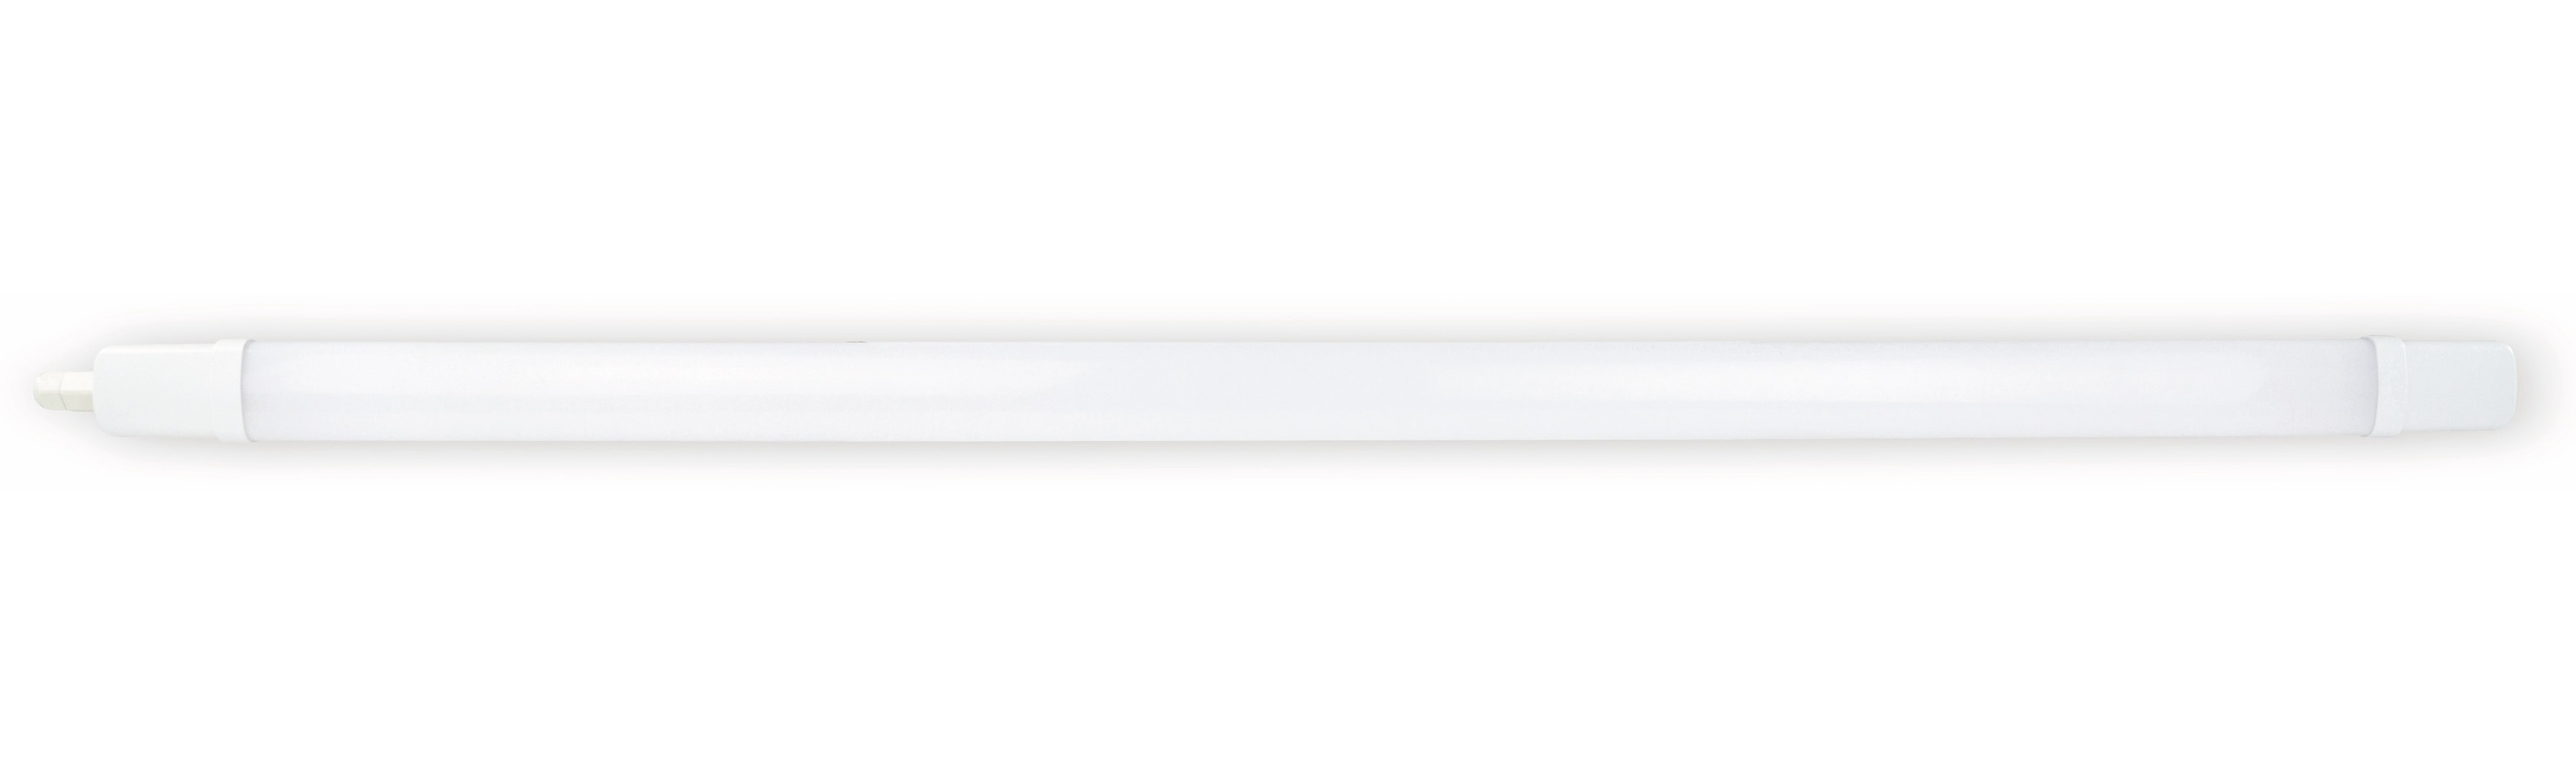 REV Feuchtraum-LED Super Slim Leuchte, 4000K, 230V~, 45W 4300lm, weiß